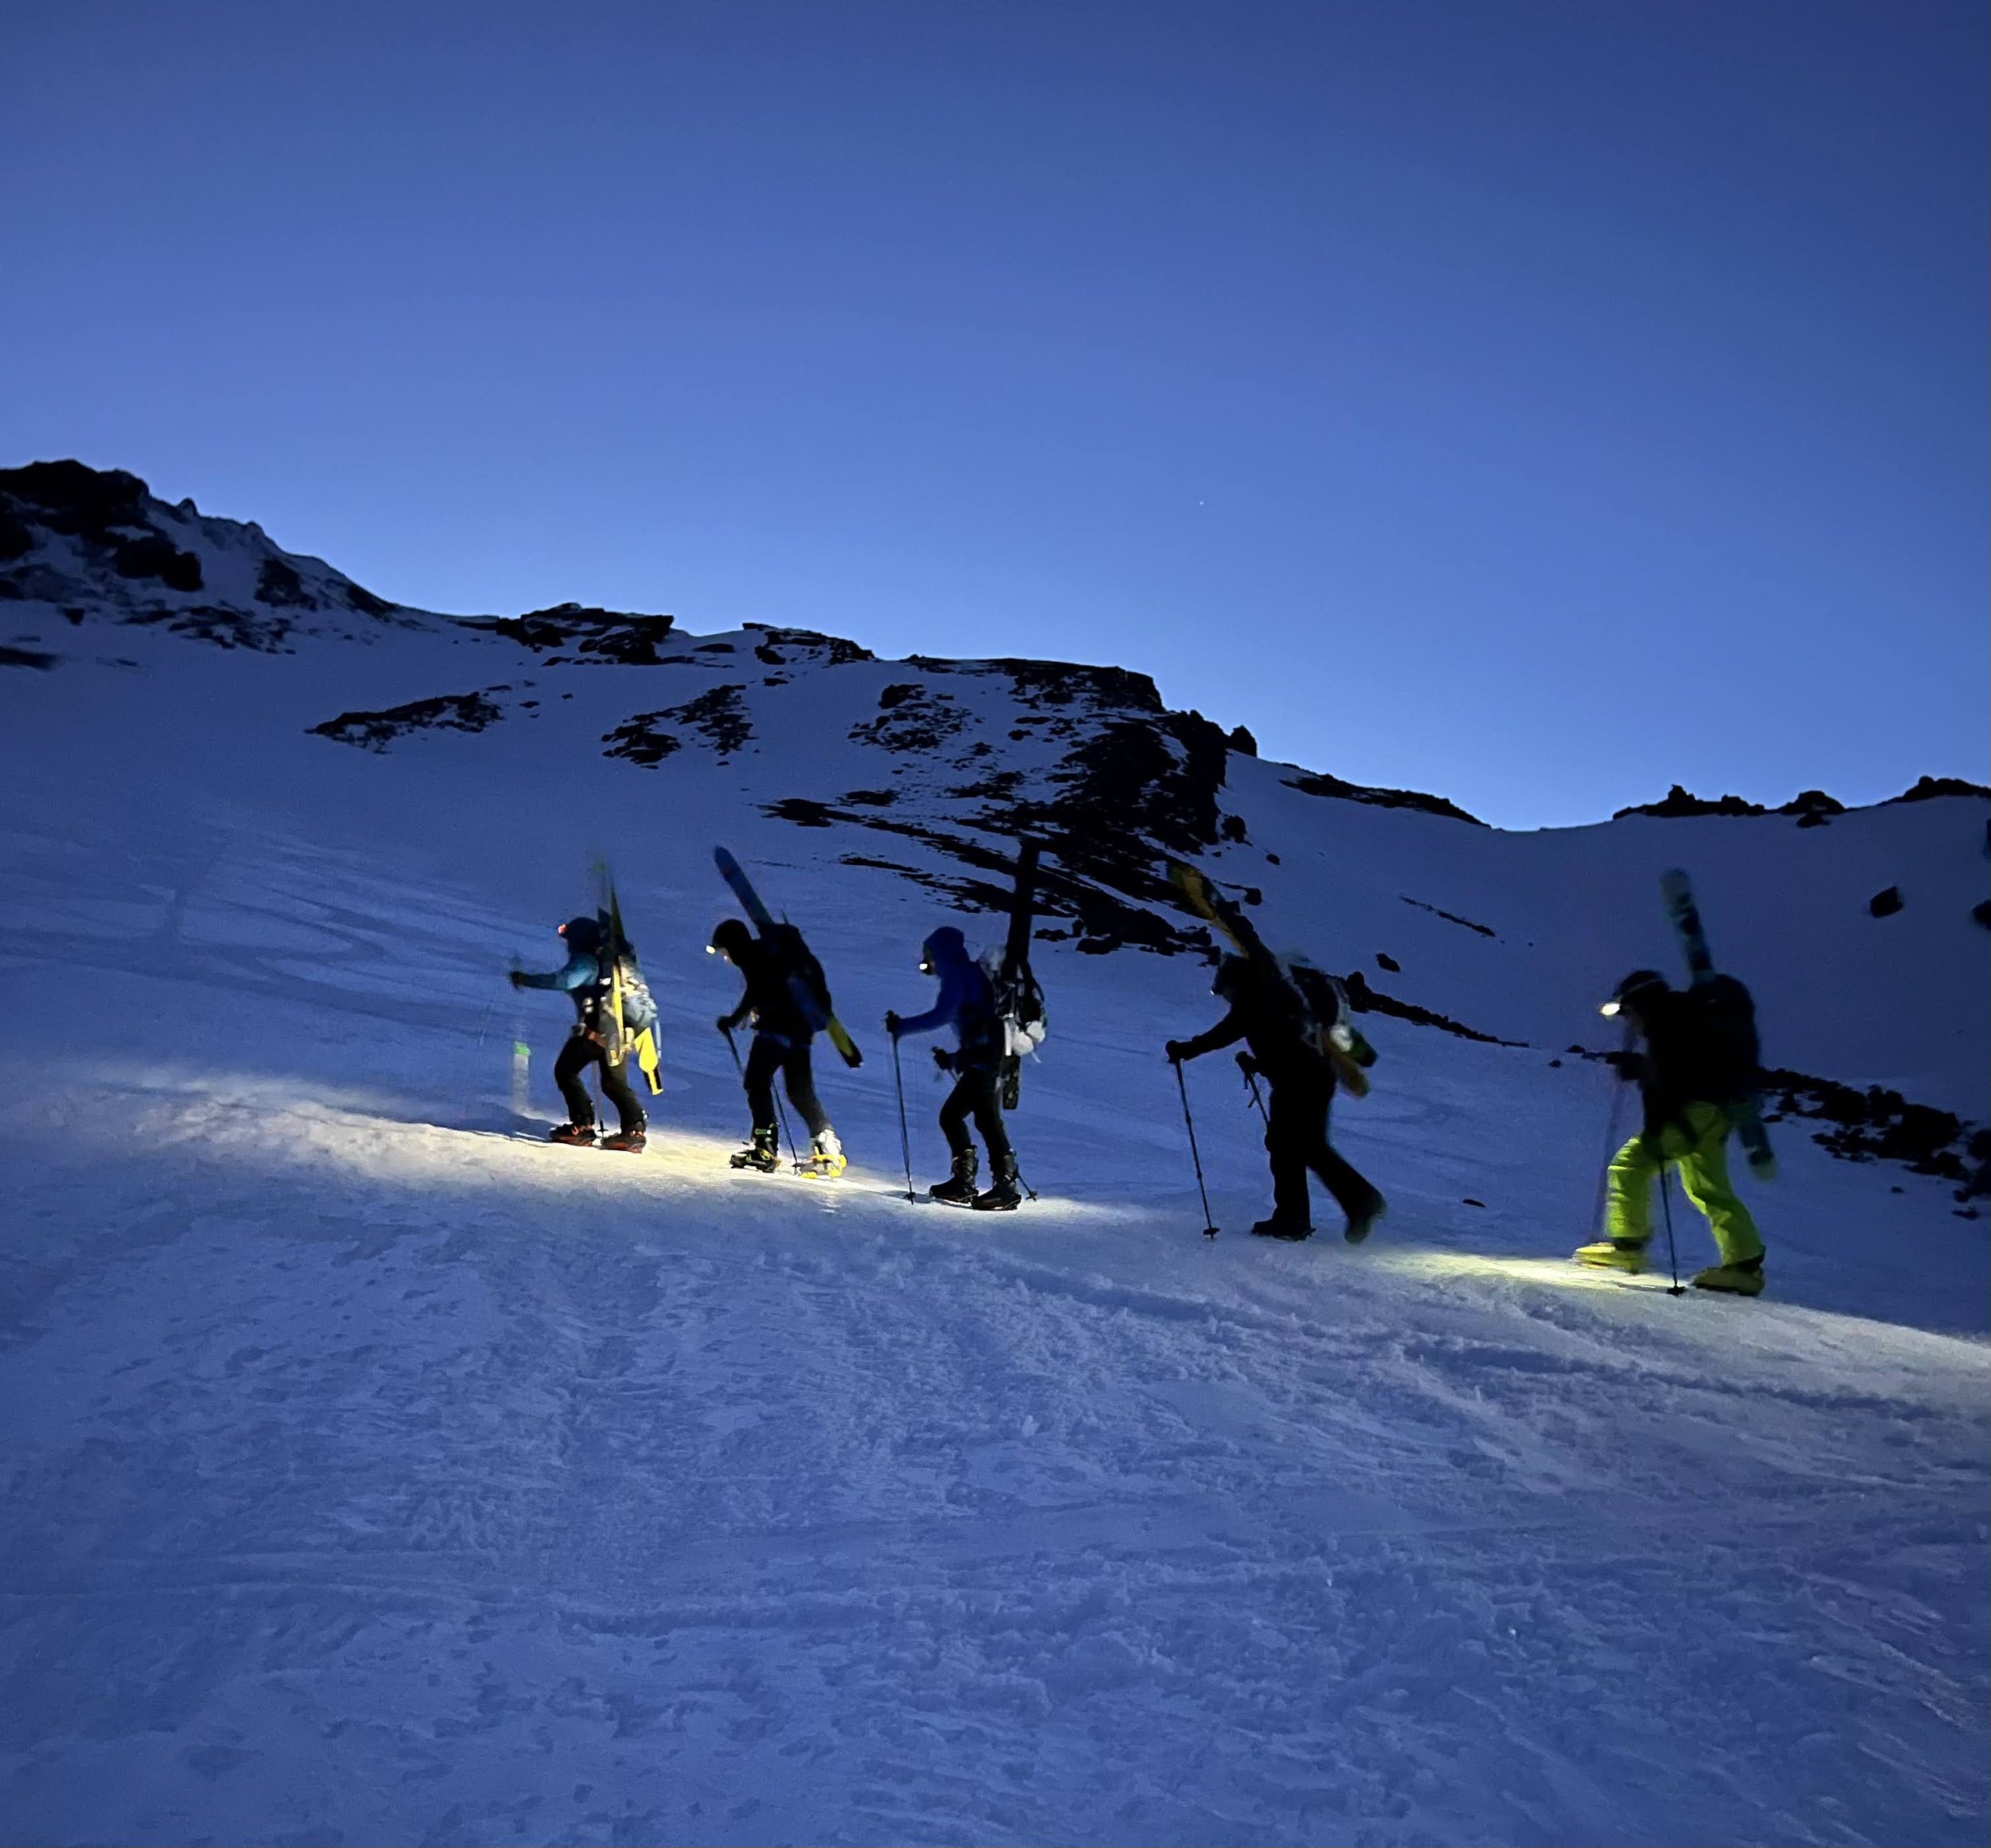 backcountry skiers get an alpine start